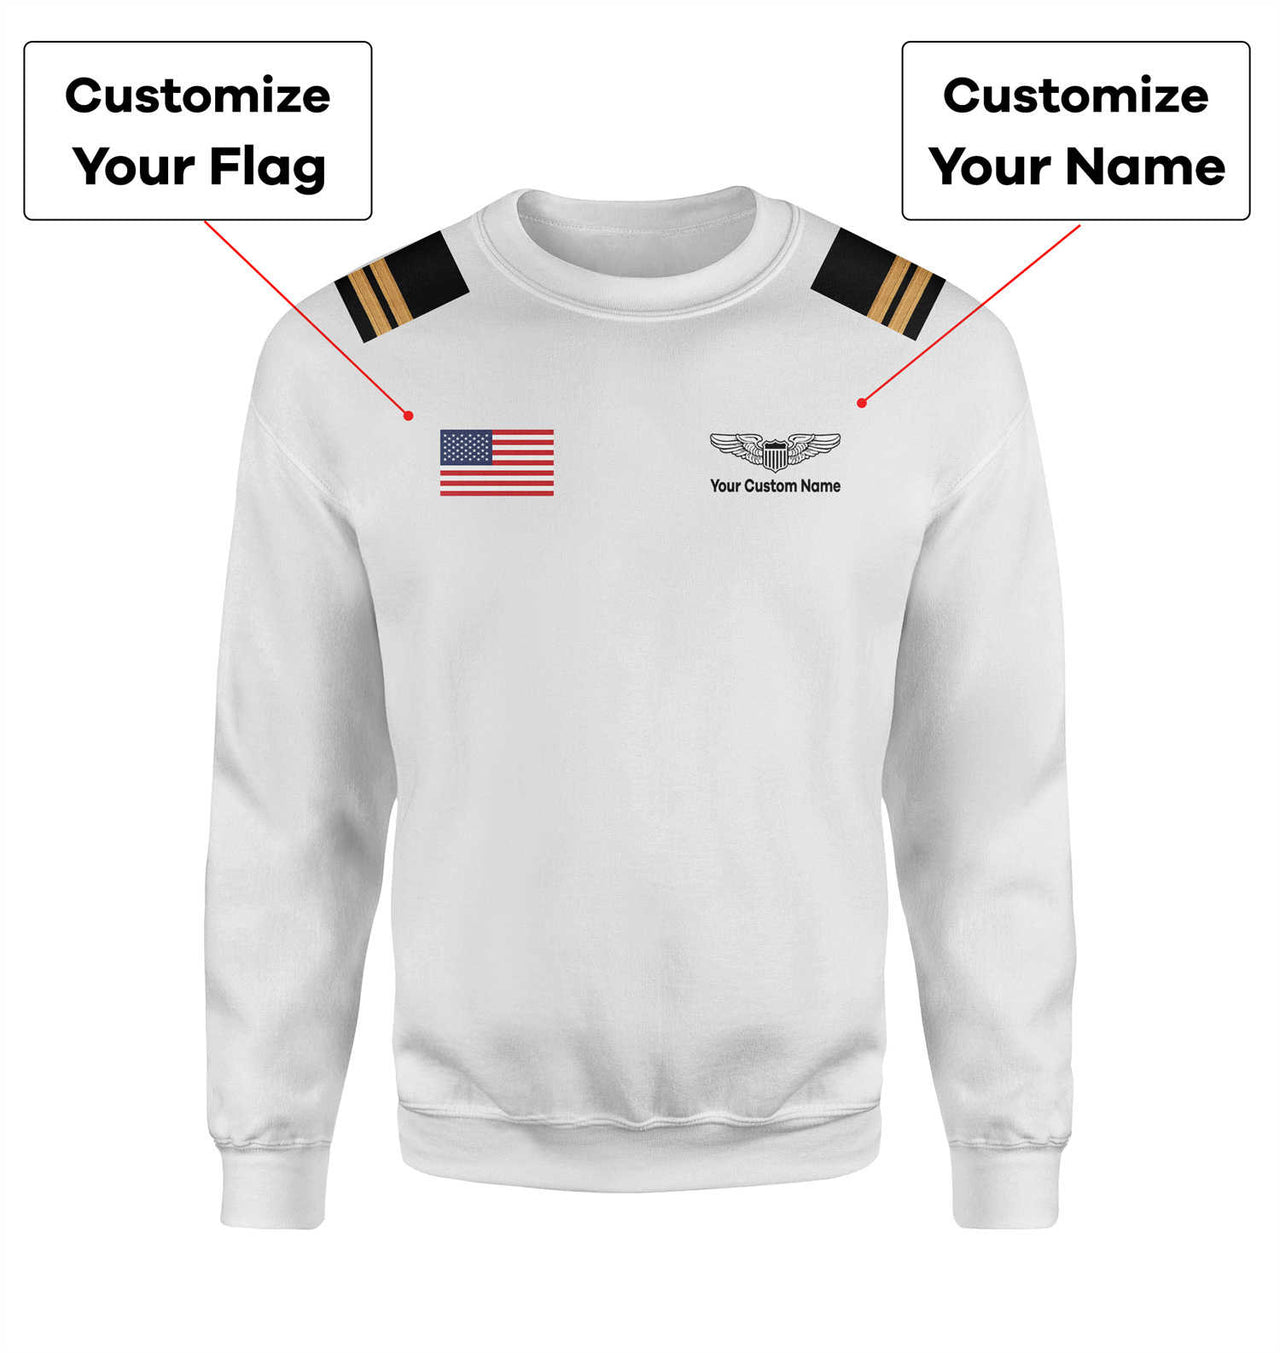 Custom Flag & Name with EPAULETTES (Military Badge) Designed 3D Sweatshirts